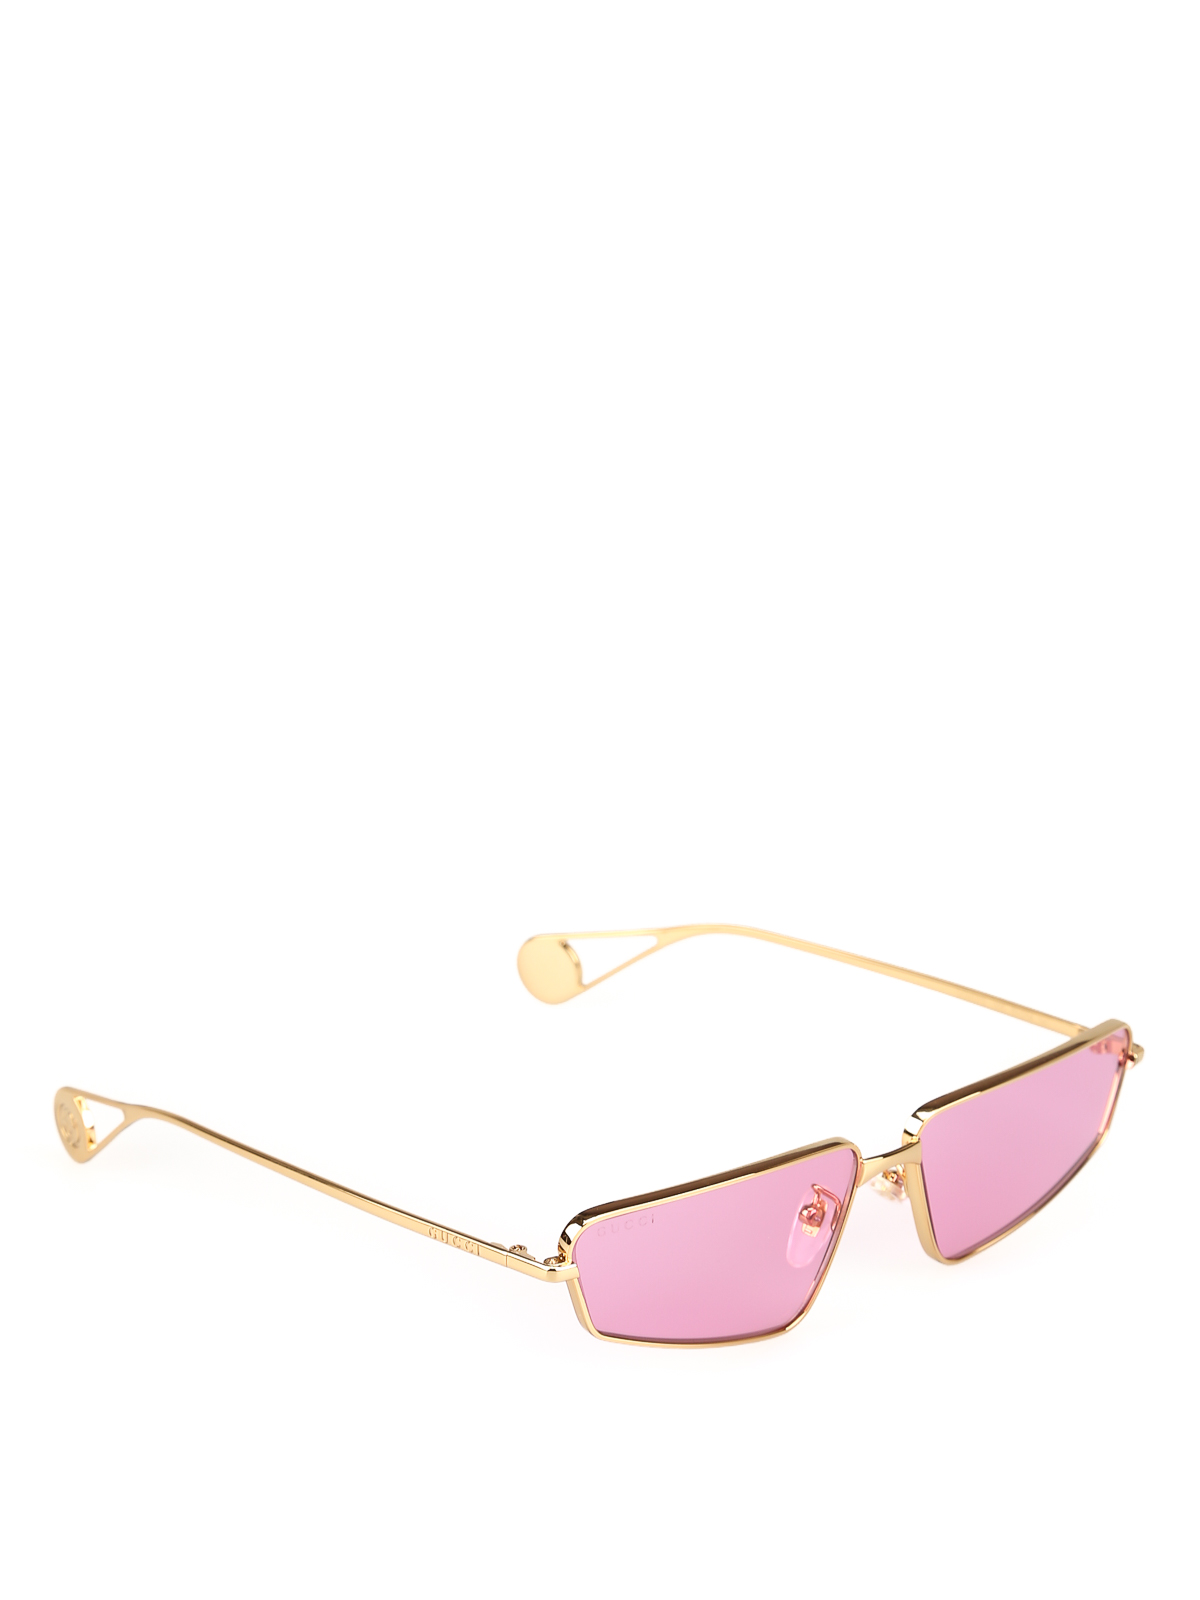 Gucci - Pink lens gold-tone sunglasses 